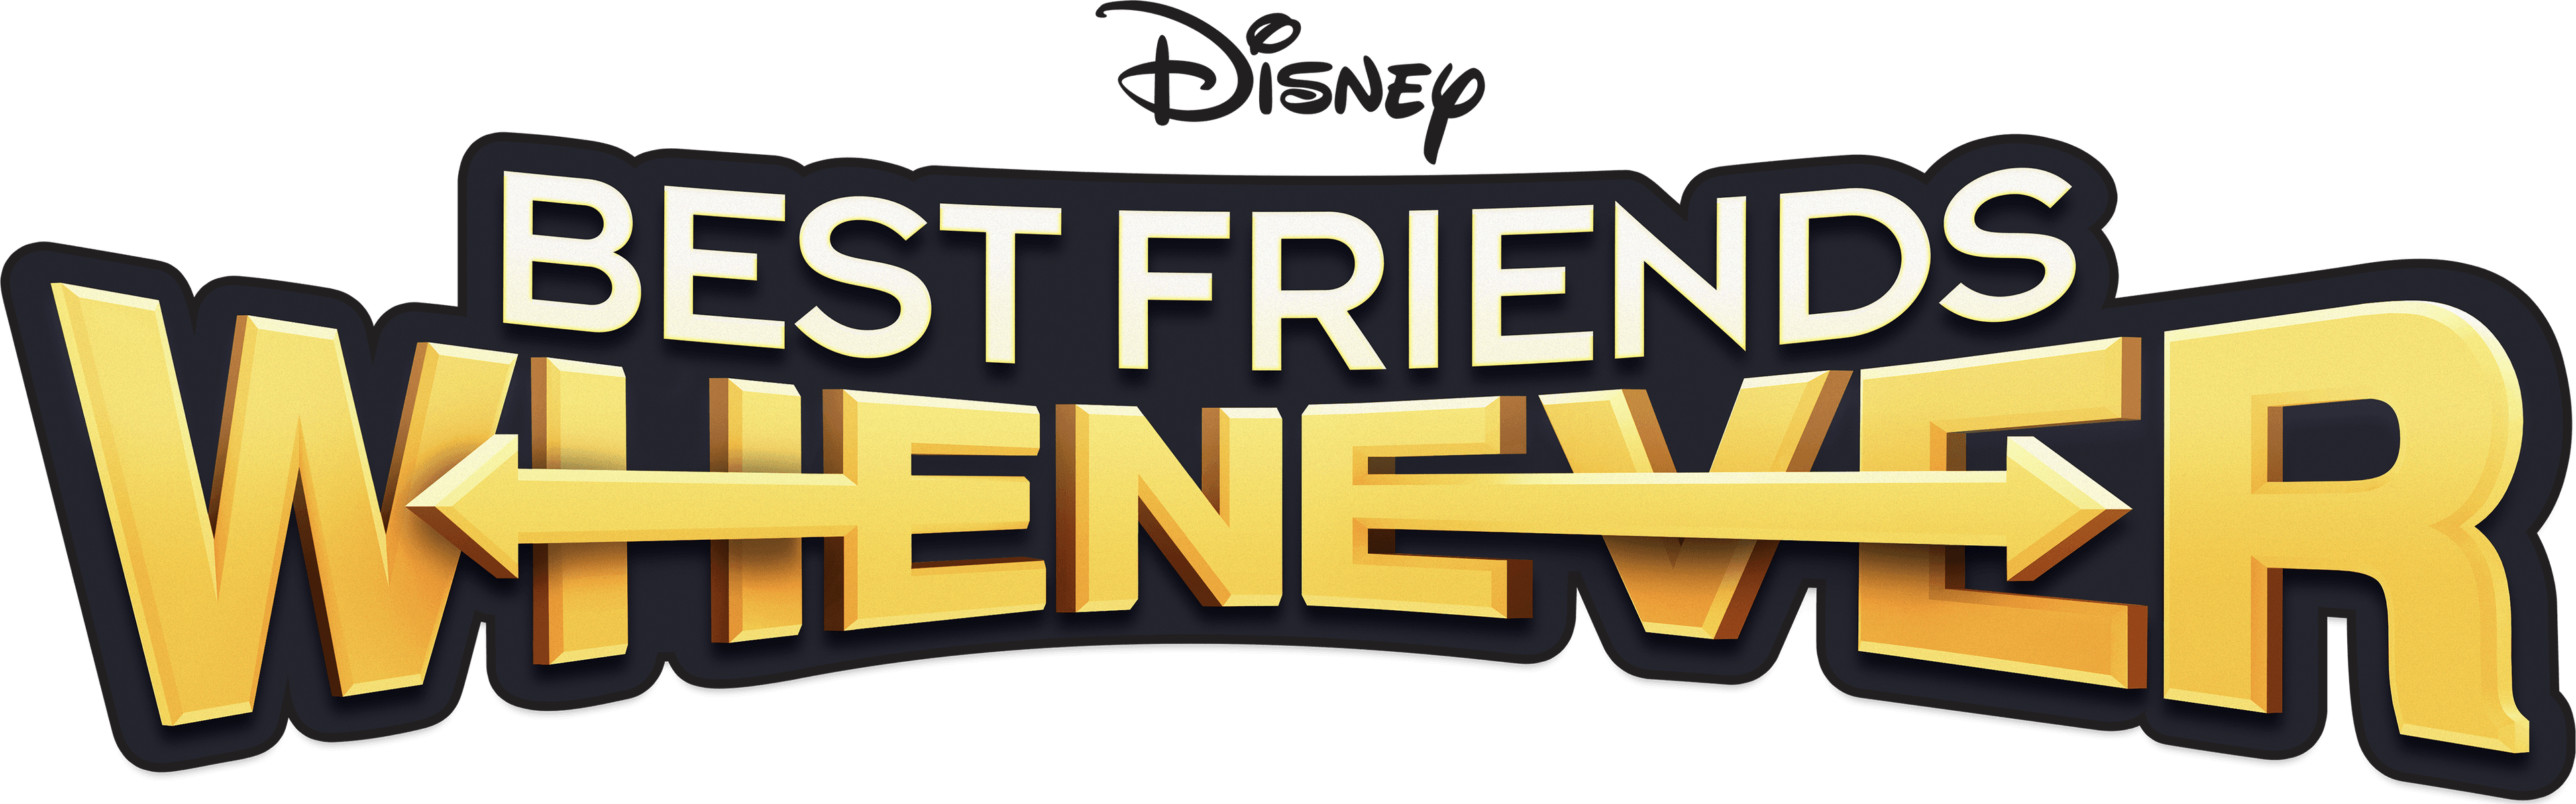 Best Friends Whenever logo